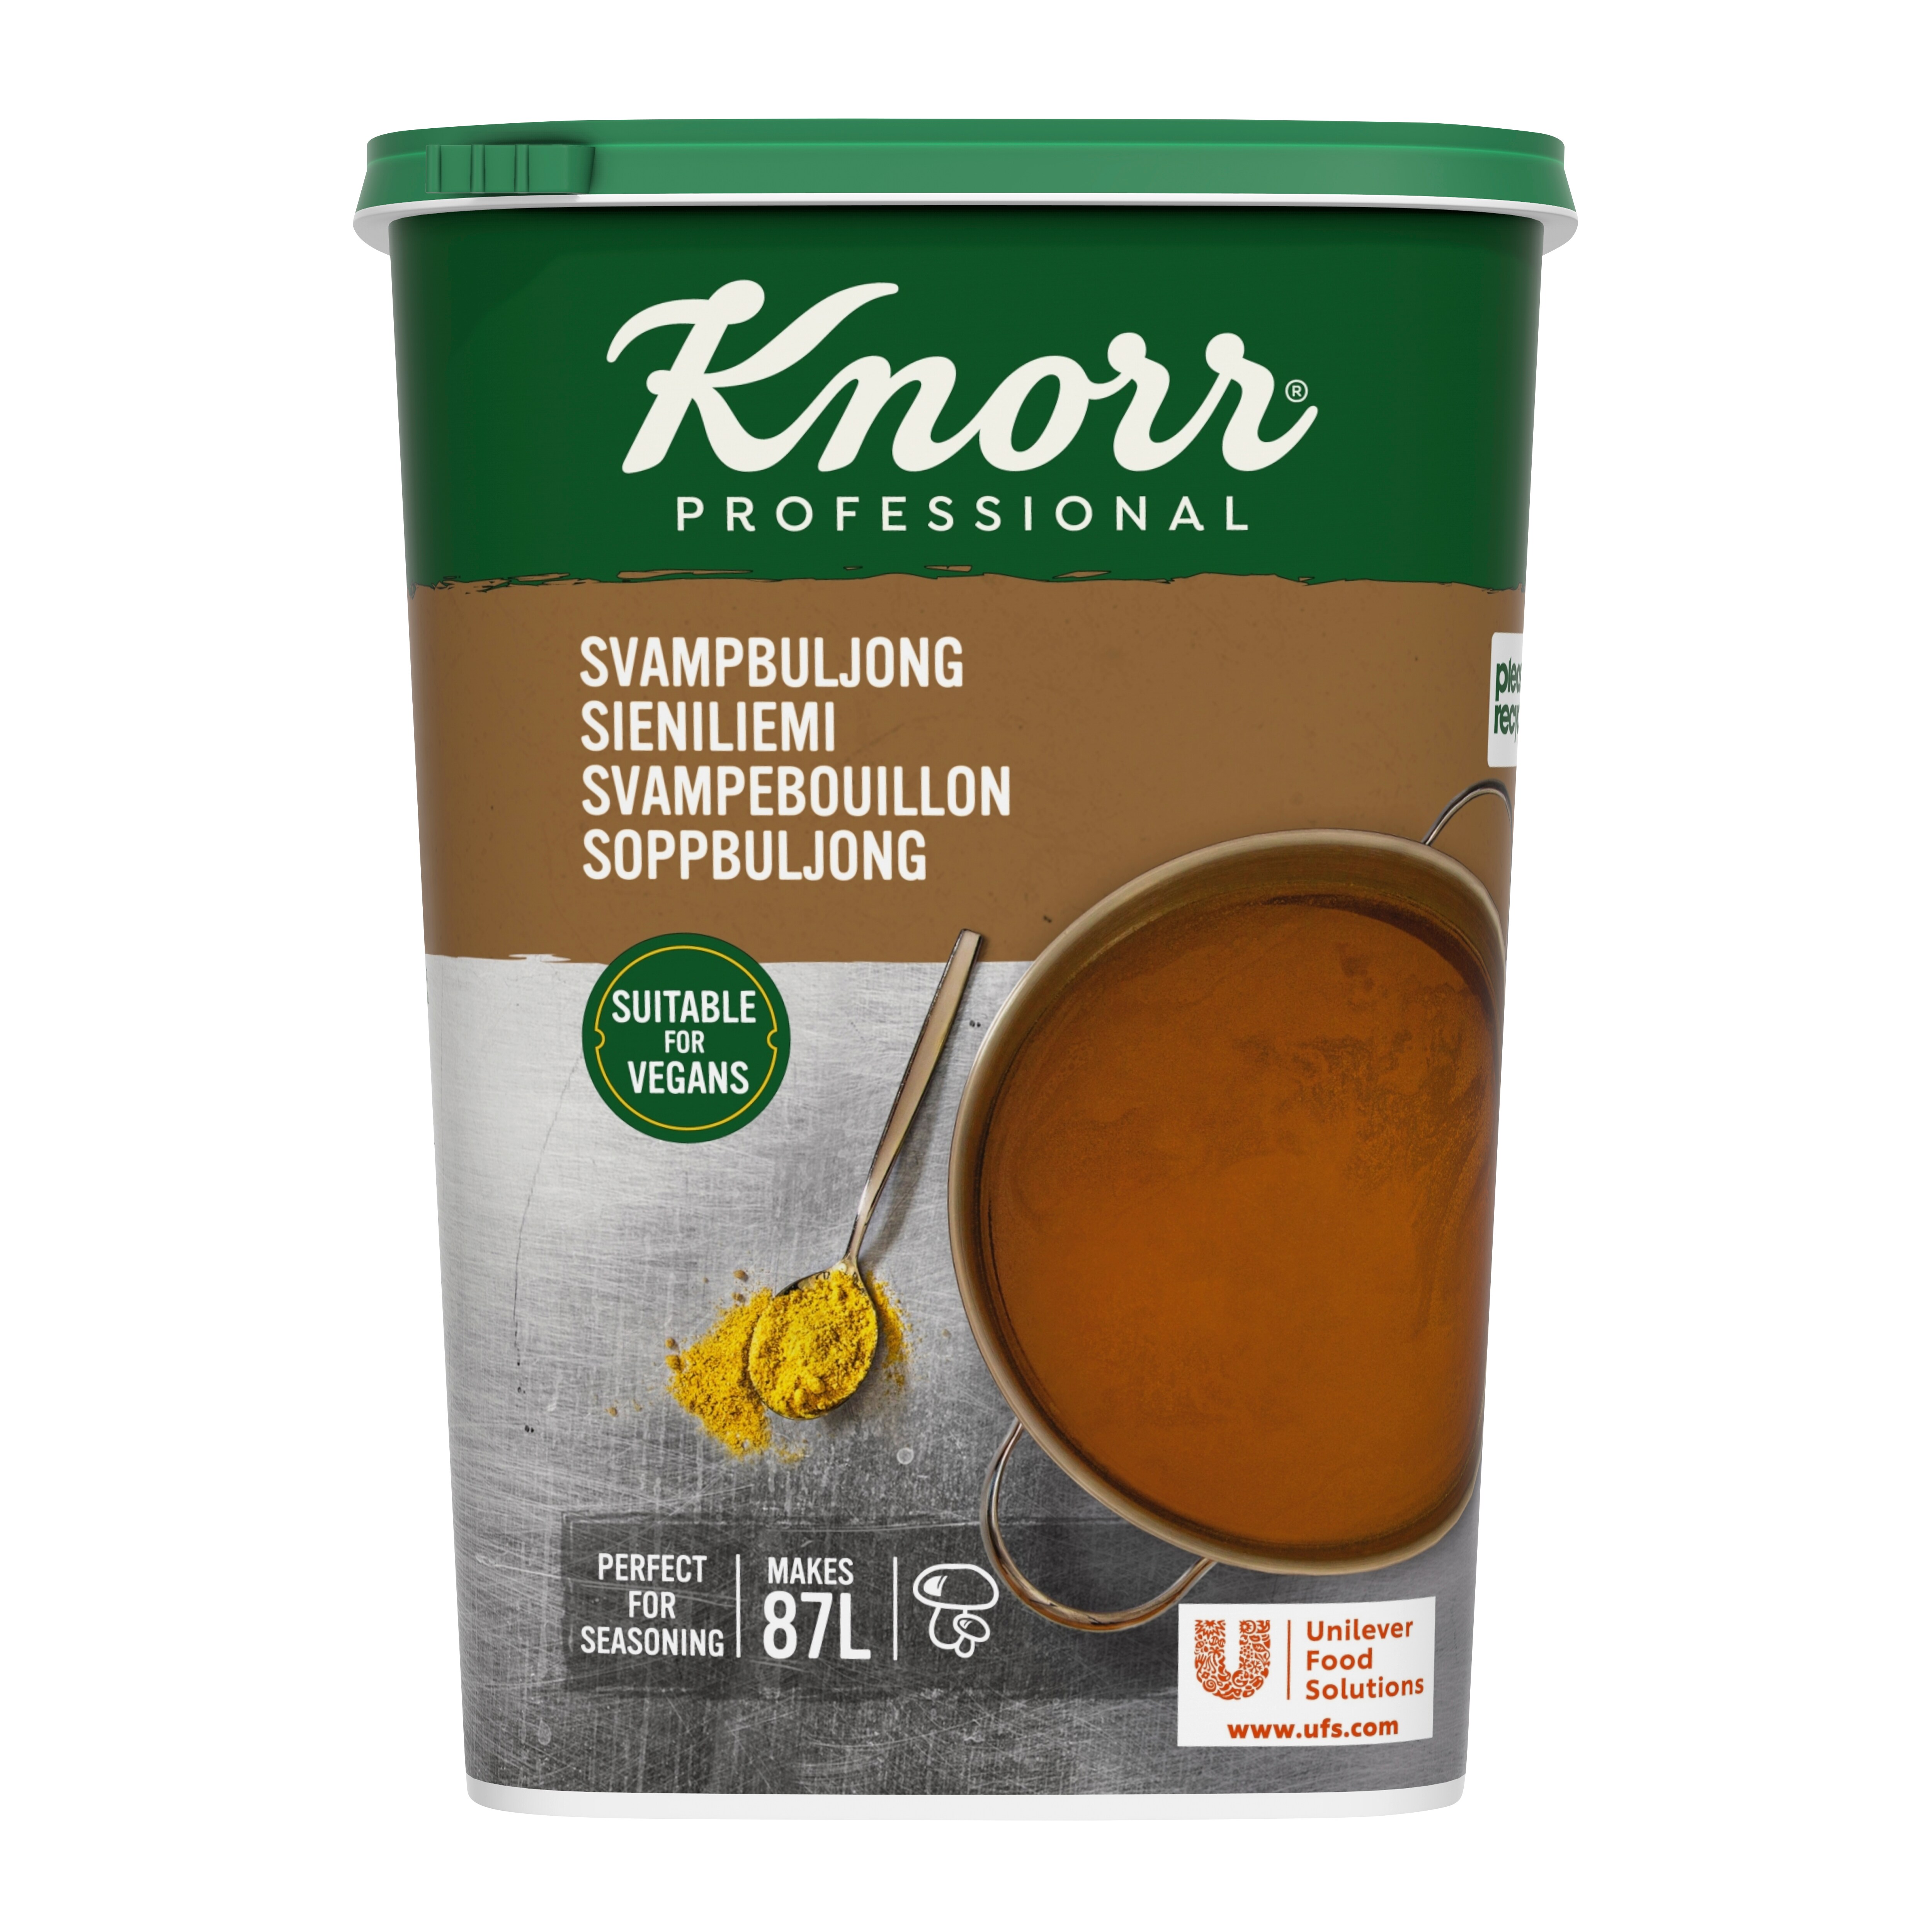 Knorr Svampbuljong, pulver 3 x 1,3 kg - 